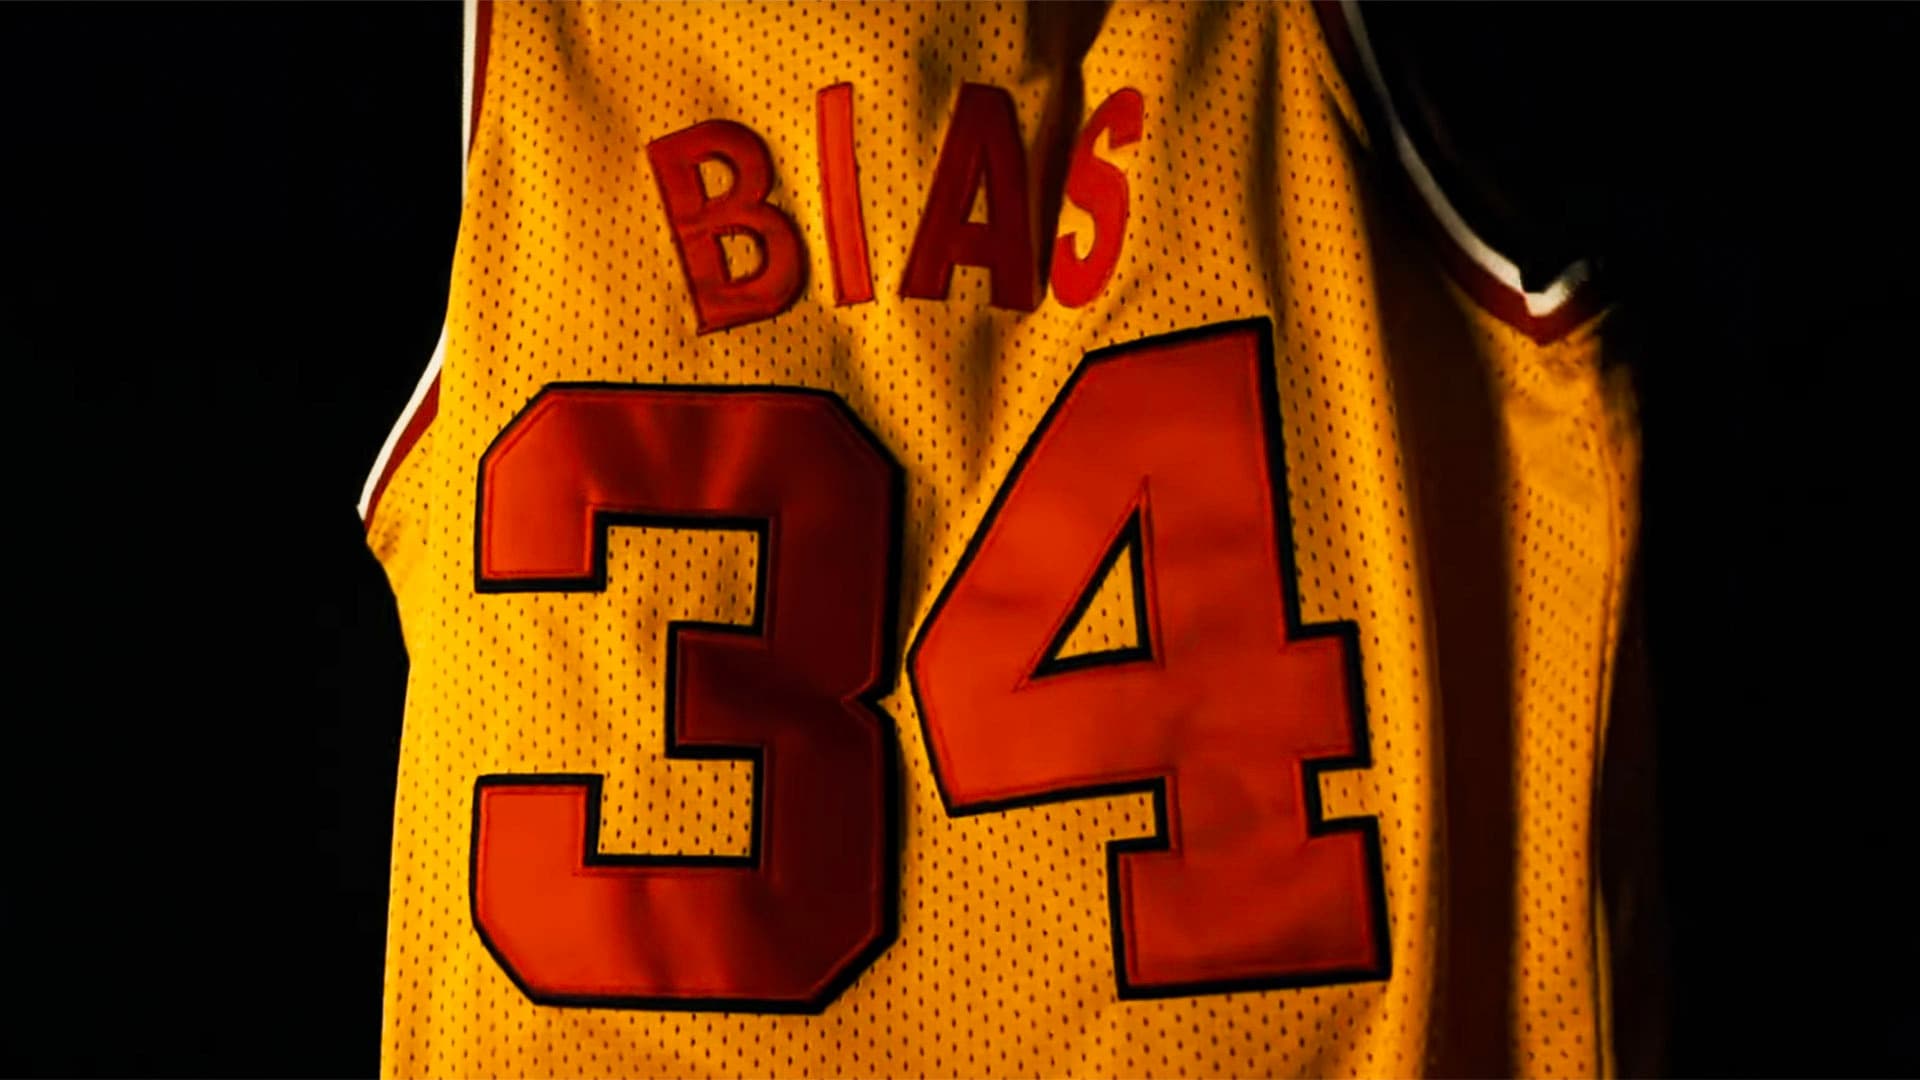 Len Bias No. 34 basketball jersey